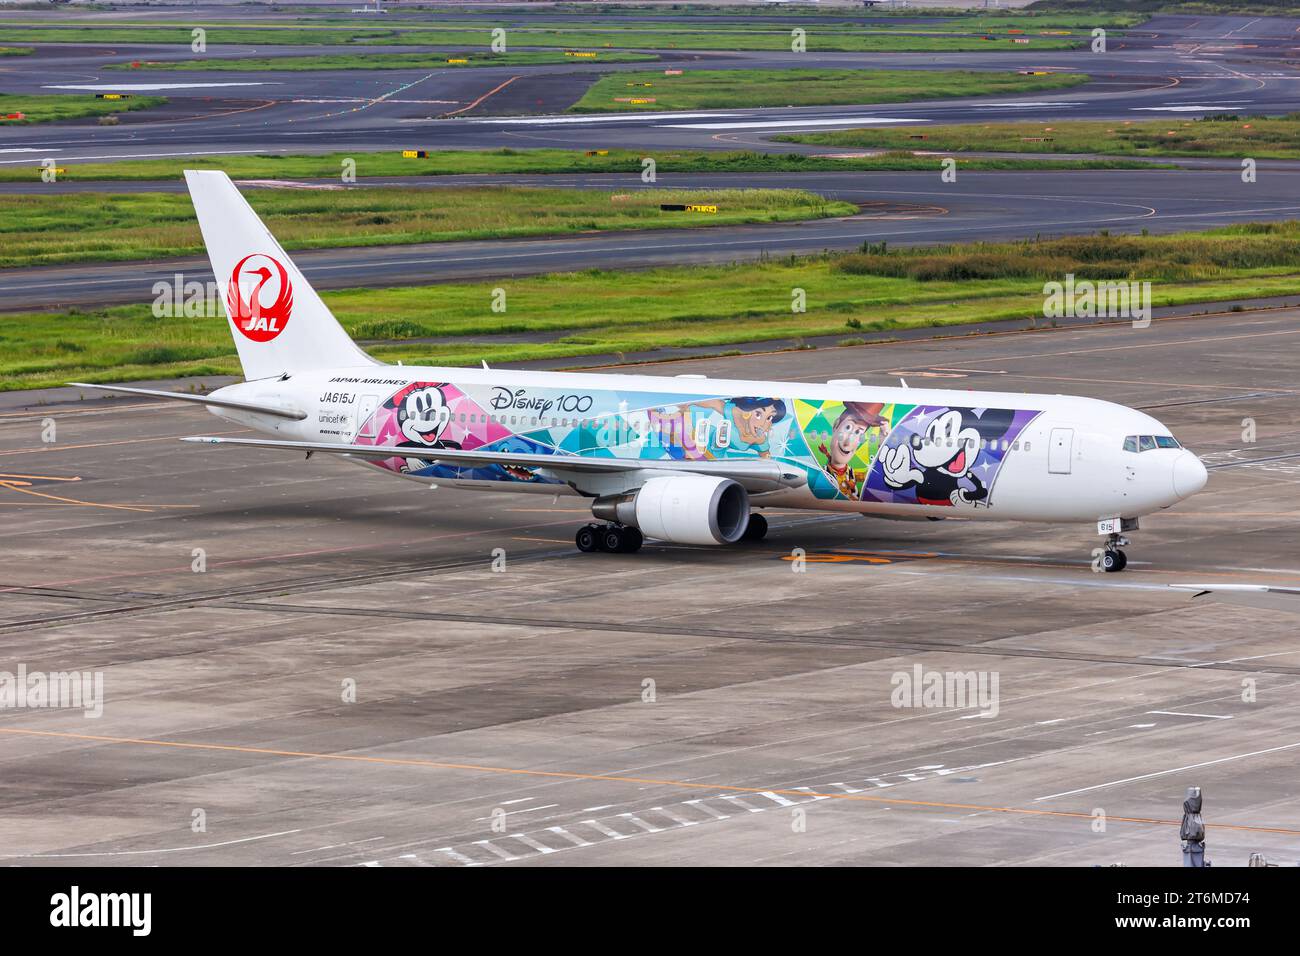 Tokio, Japan - 25. September 2023: Japan Airlines JAL Boeing 767-300ER Flugzeug mit Disney 100 Sonderlackierung am Flughafen Tokio Haneda (HND) in Japan. Stockfoto